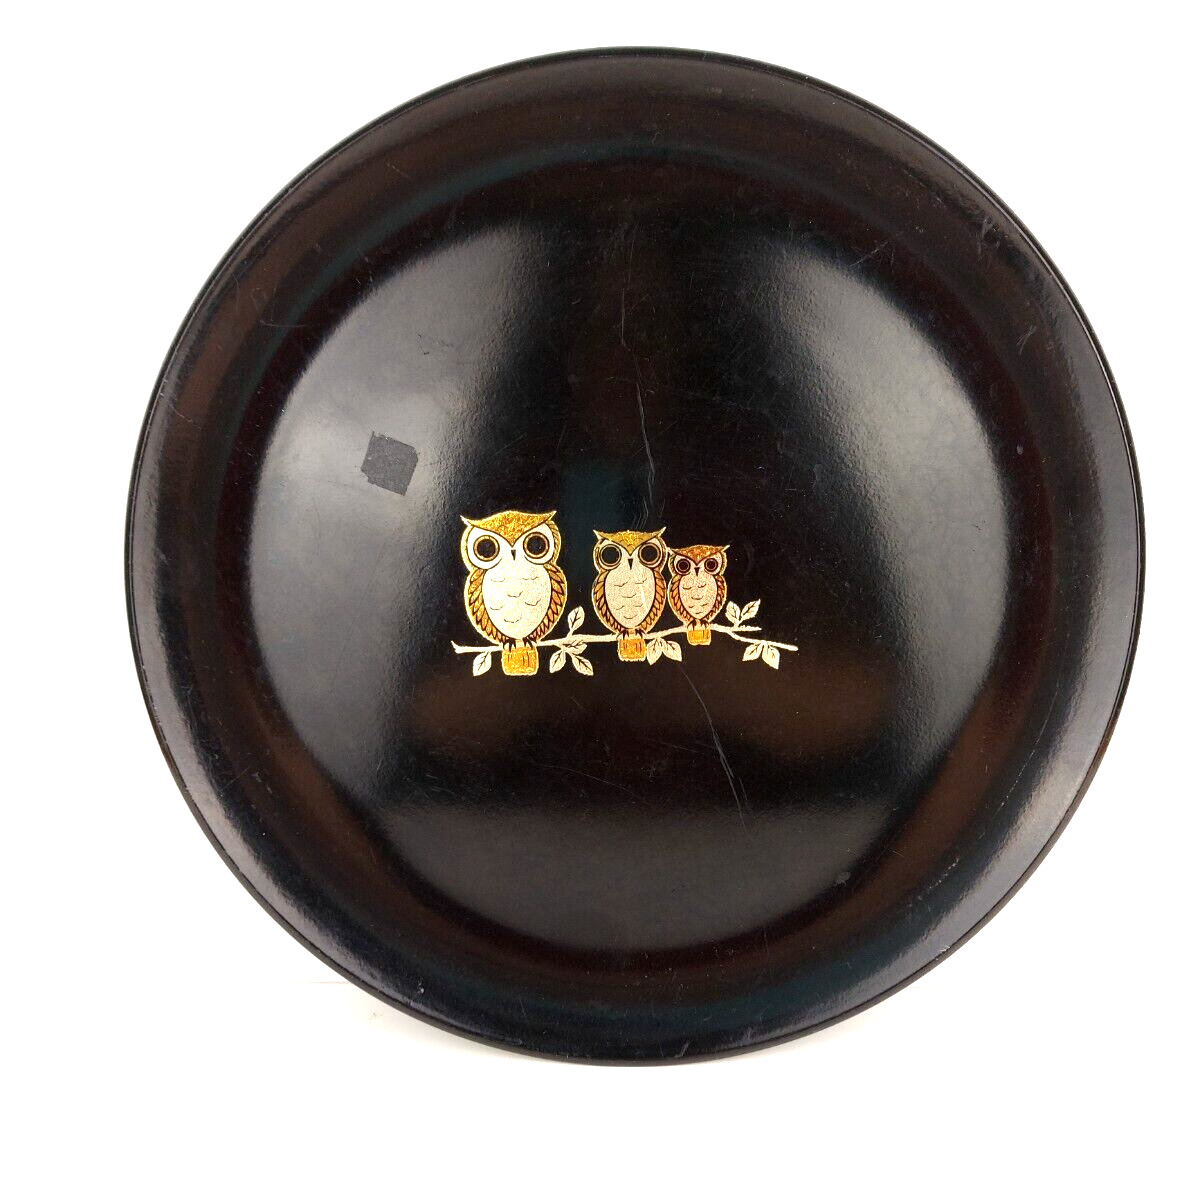 Vintage 1970s Otagri Original Japan Black Decorative Plate Gold Owls 11.75